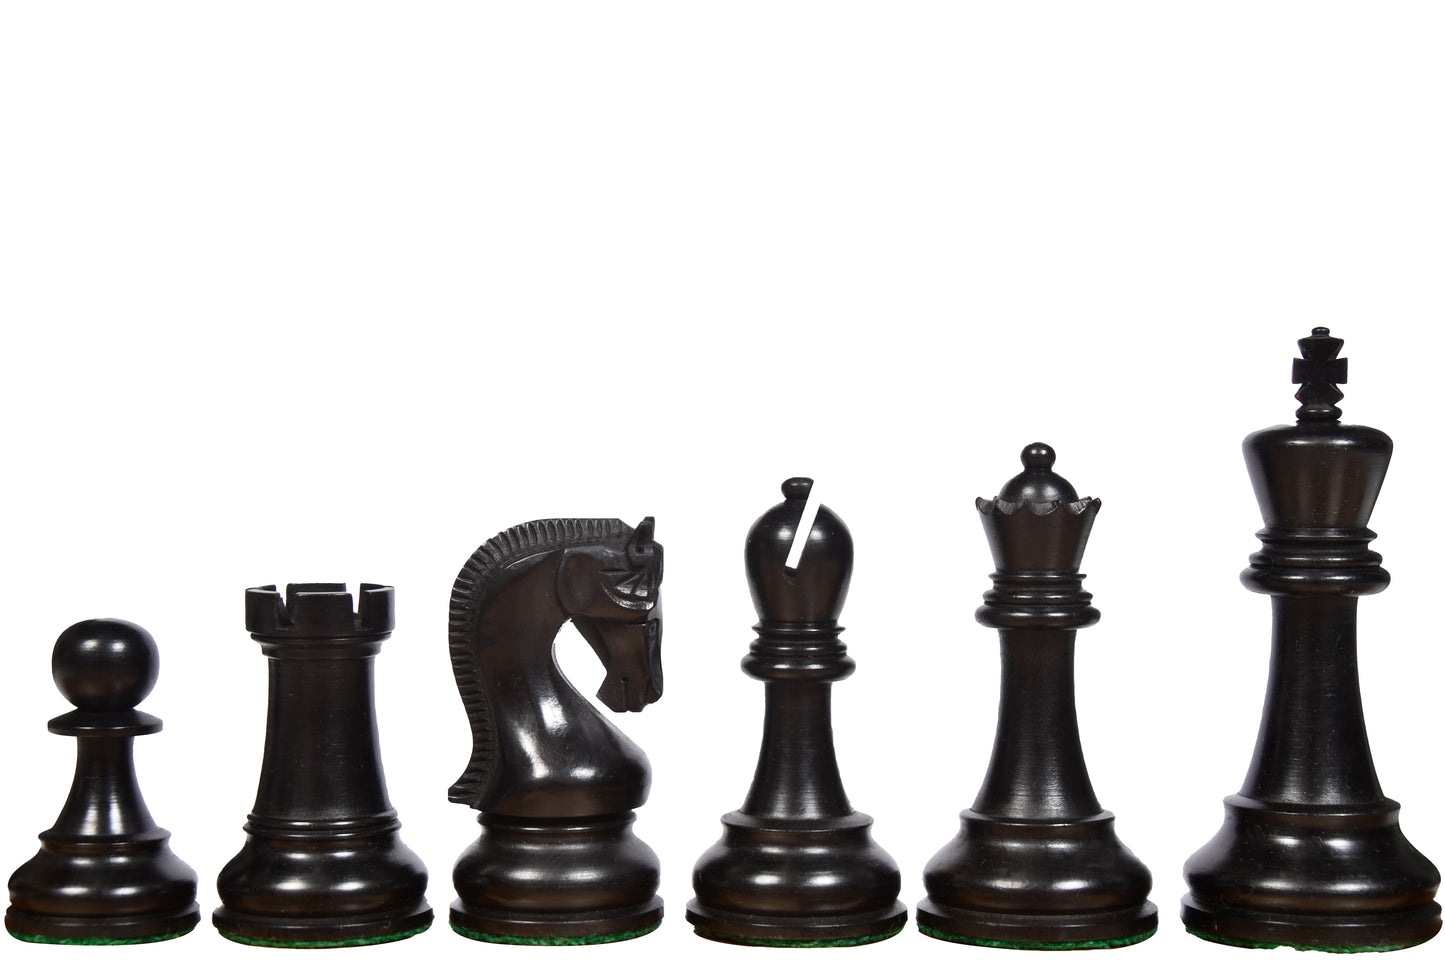 The Leningrad Club-Sized Wooden Chess Pieces in Black Ebonized Wood & Boxwood- 4.0" King